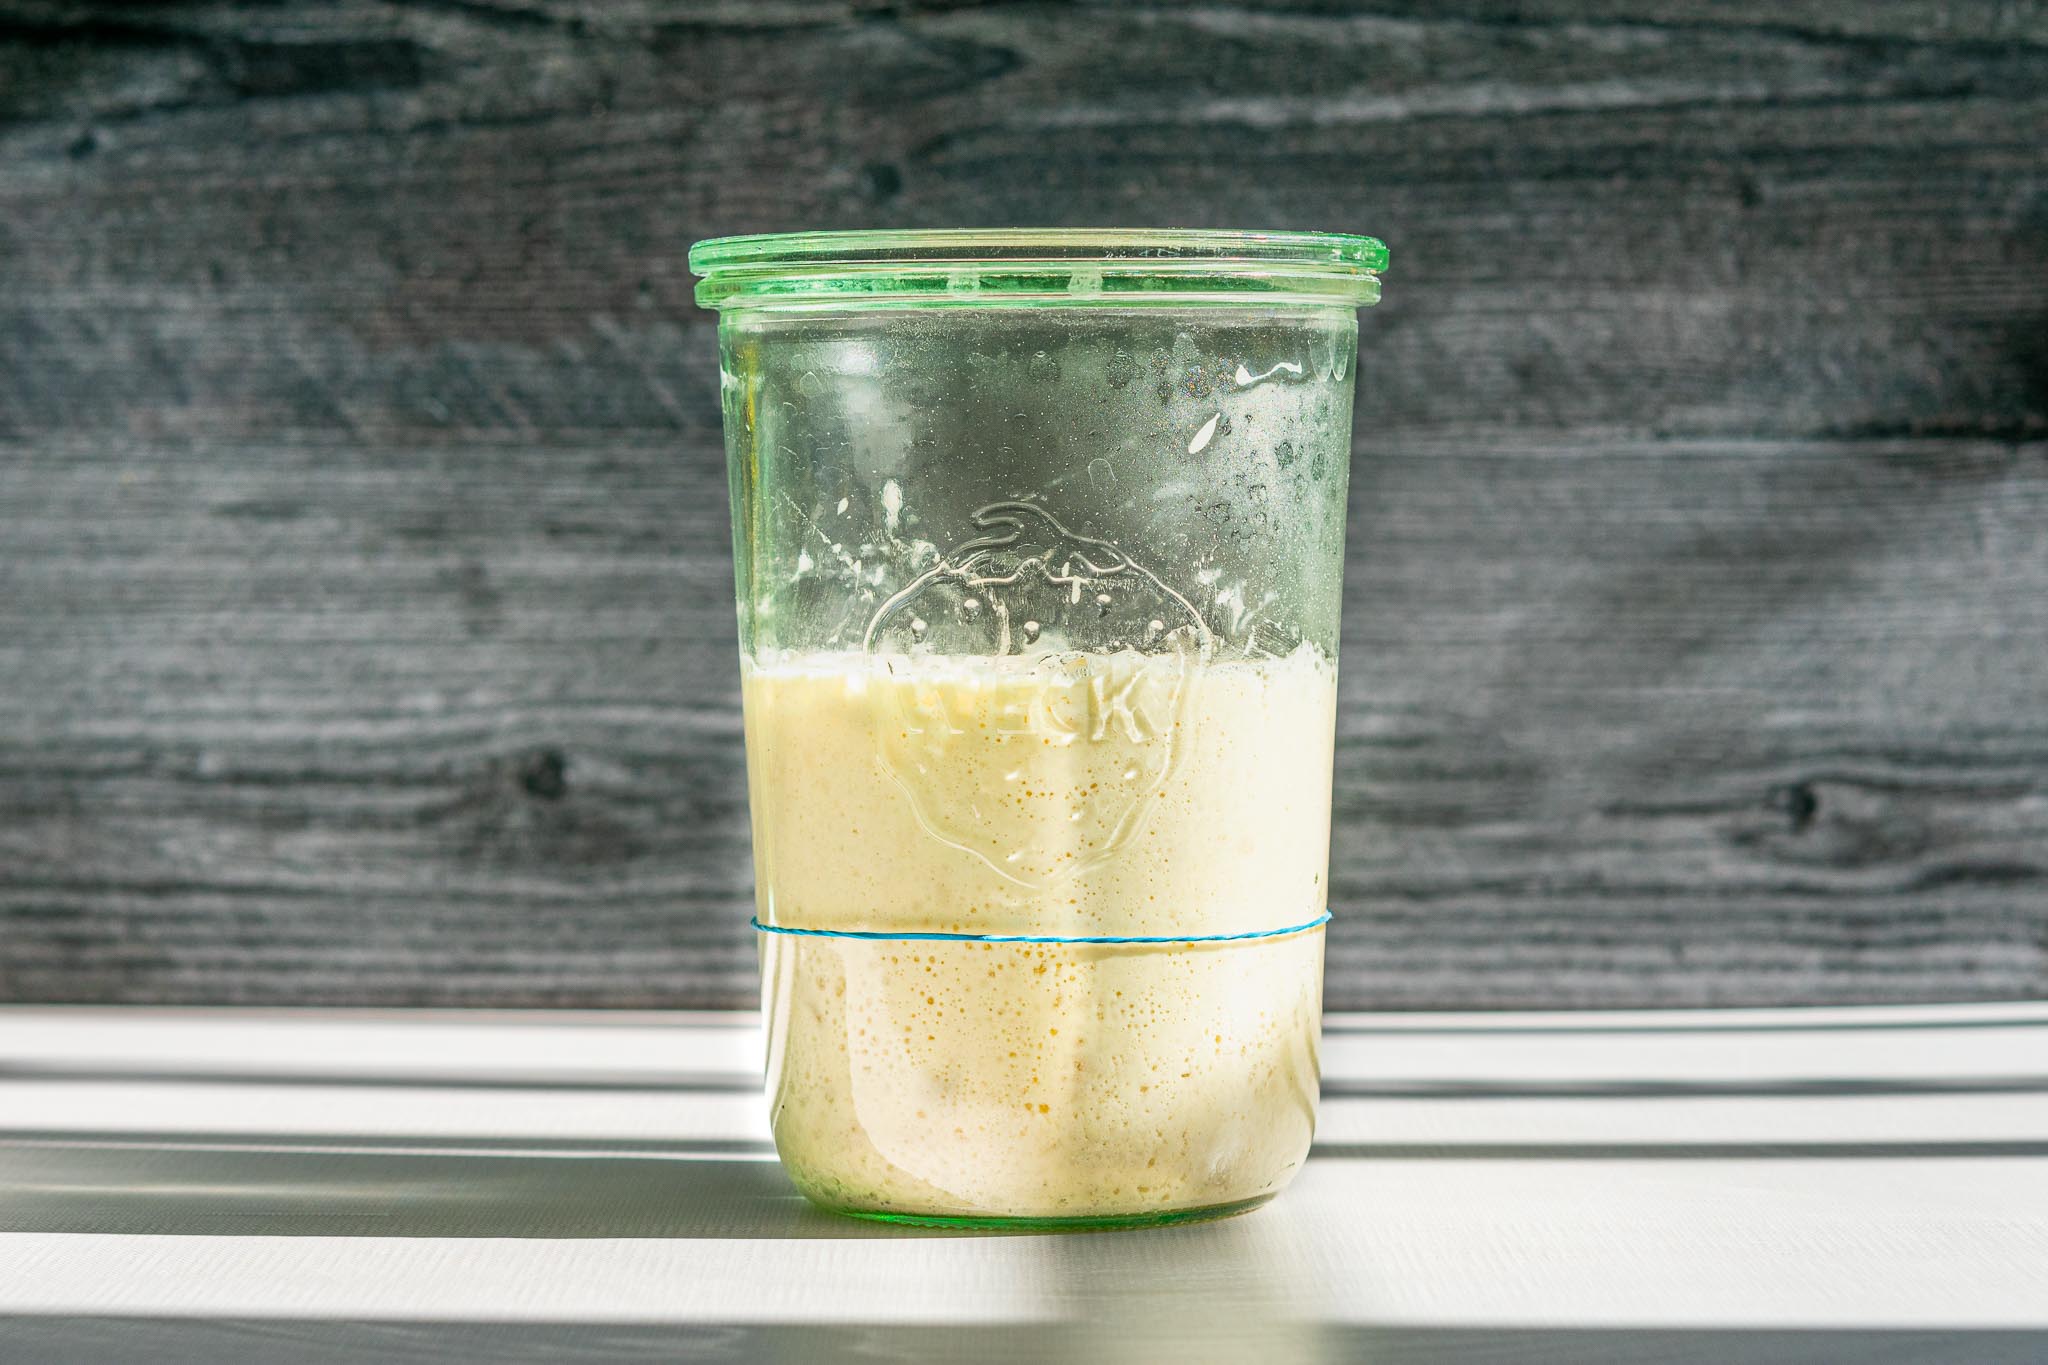 image of a glass jar containing sourdough starter